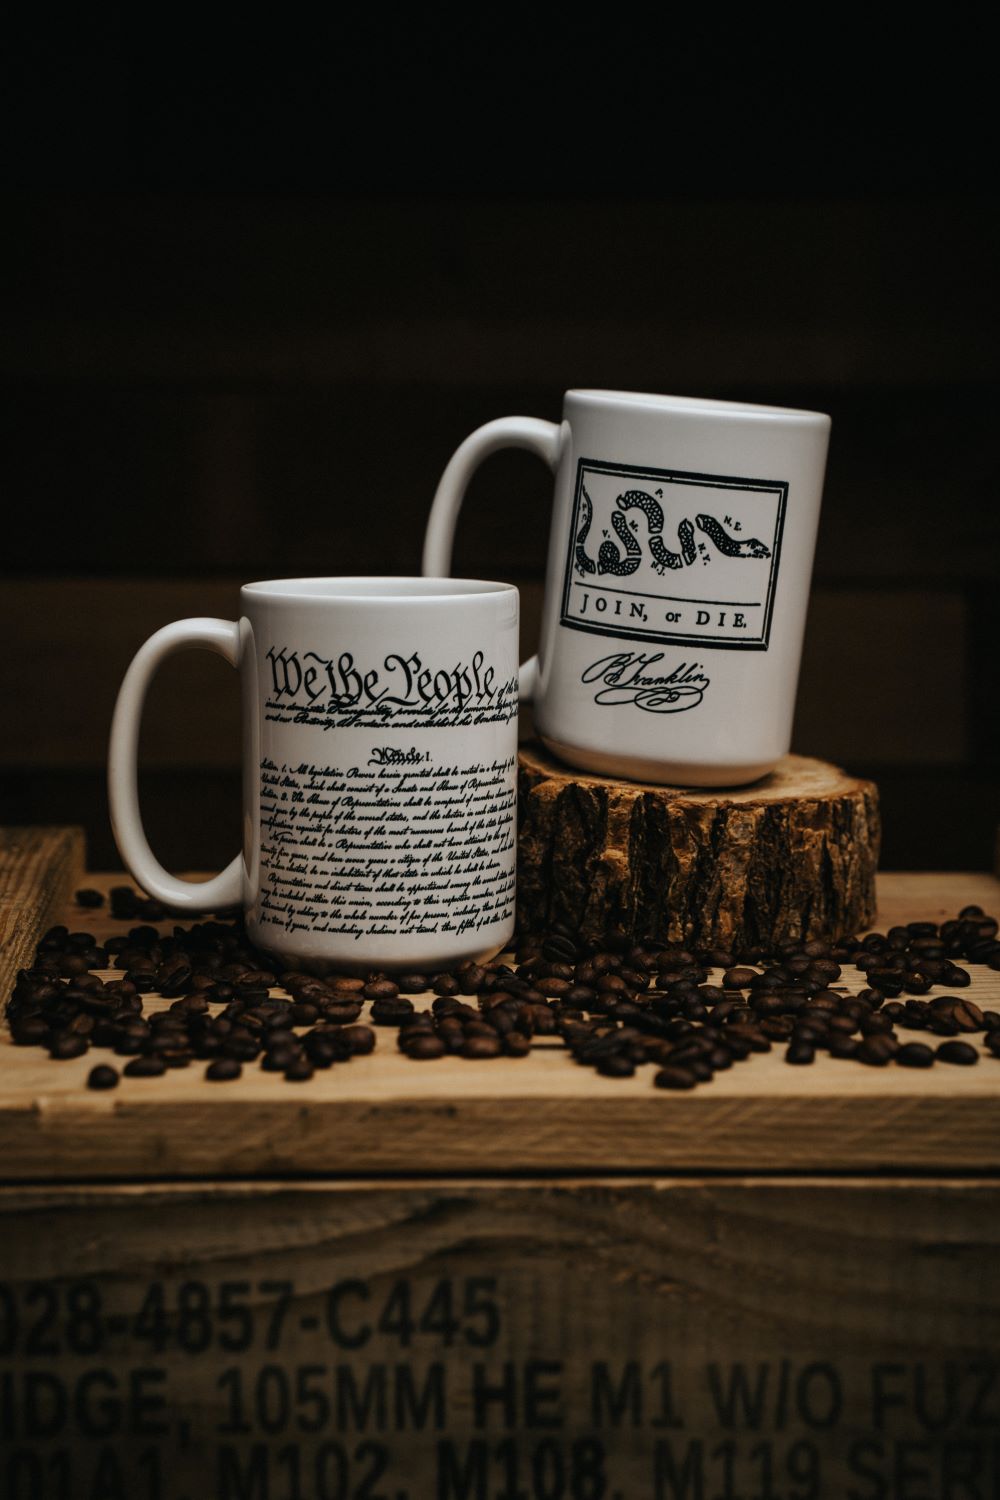 2nd Amendment Tumbler Gift for Men Mens Coffee Cups Political Mens